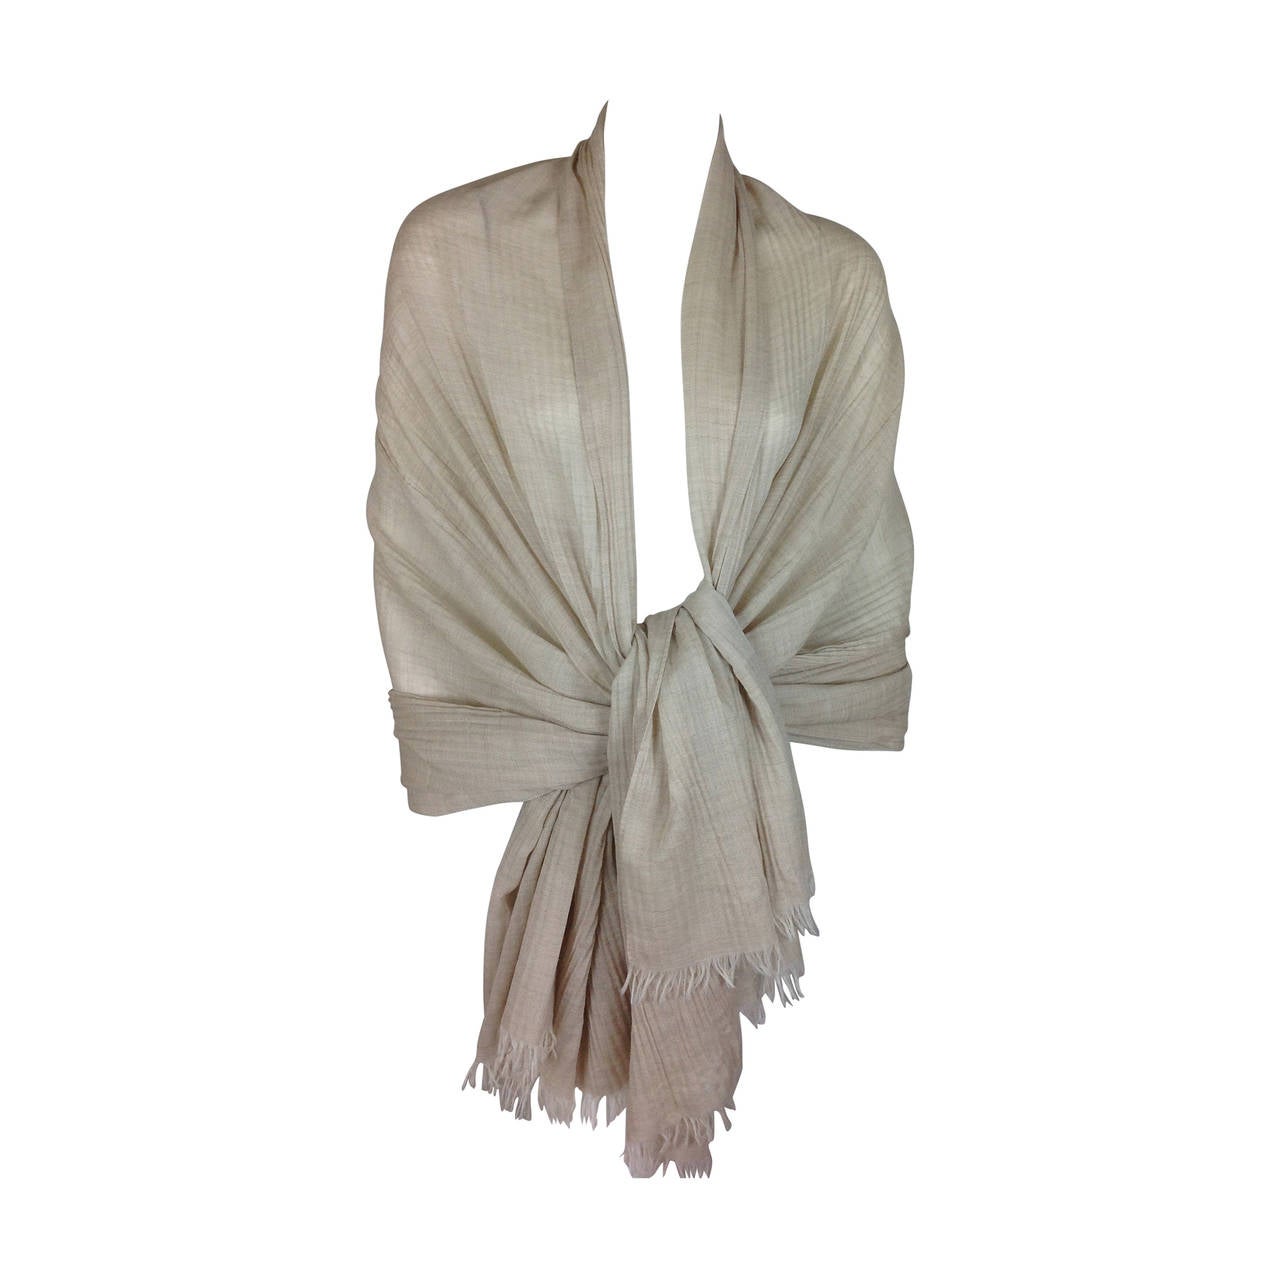 Tissue weight cashmere Hermes scarf shawl